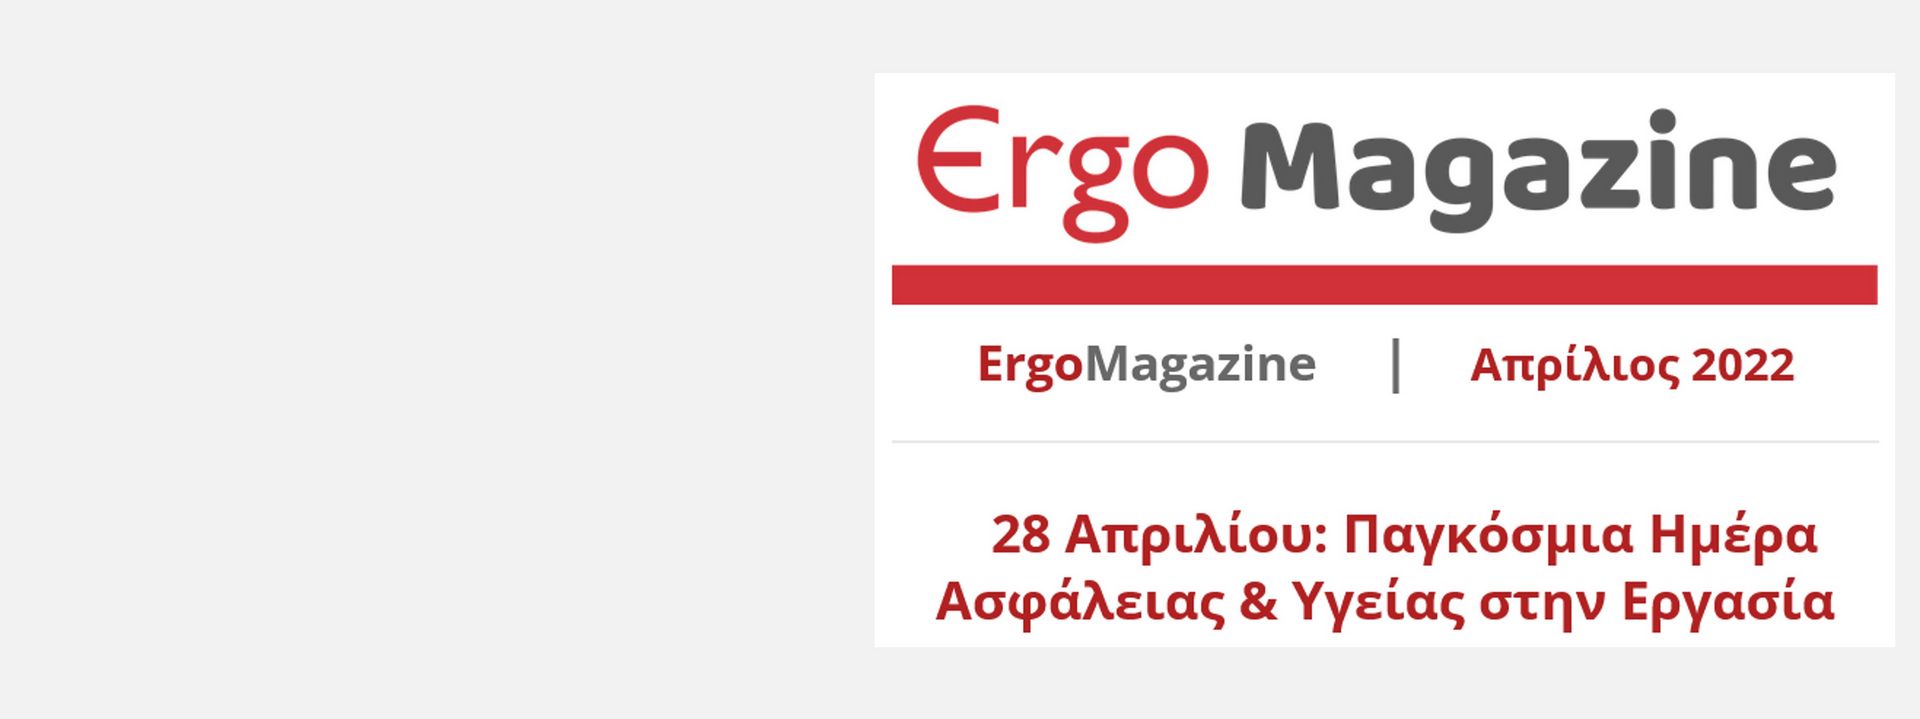 ErgoMagazine Apr 22